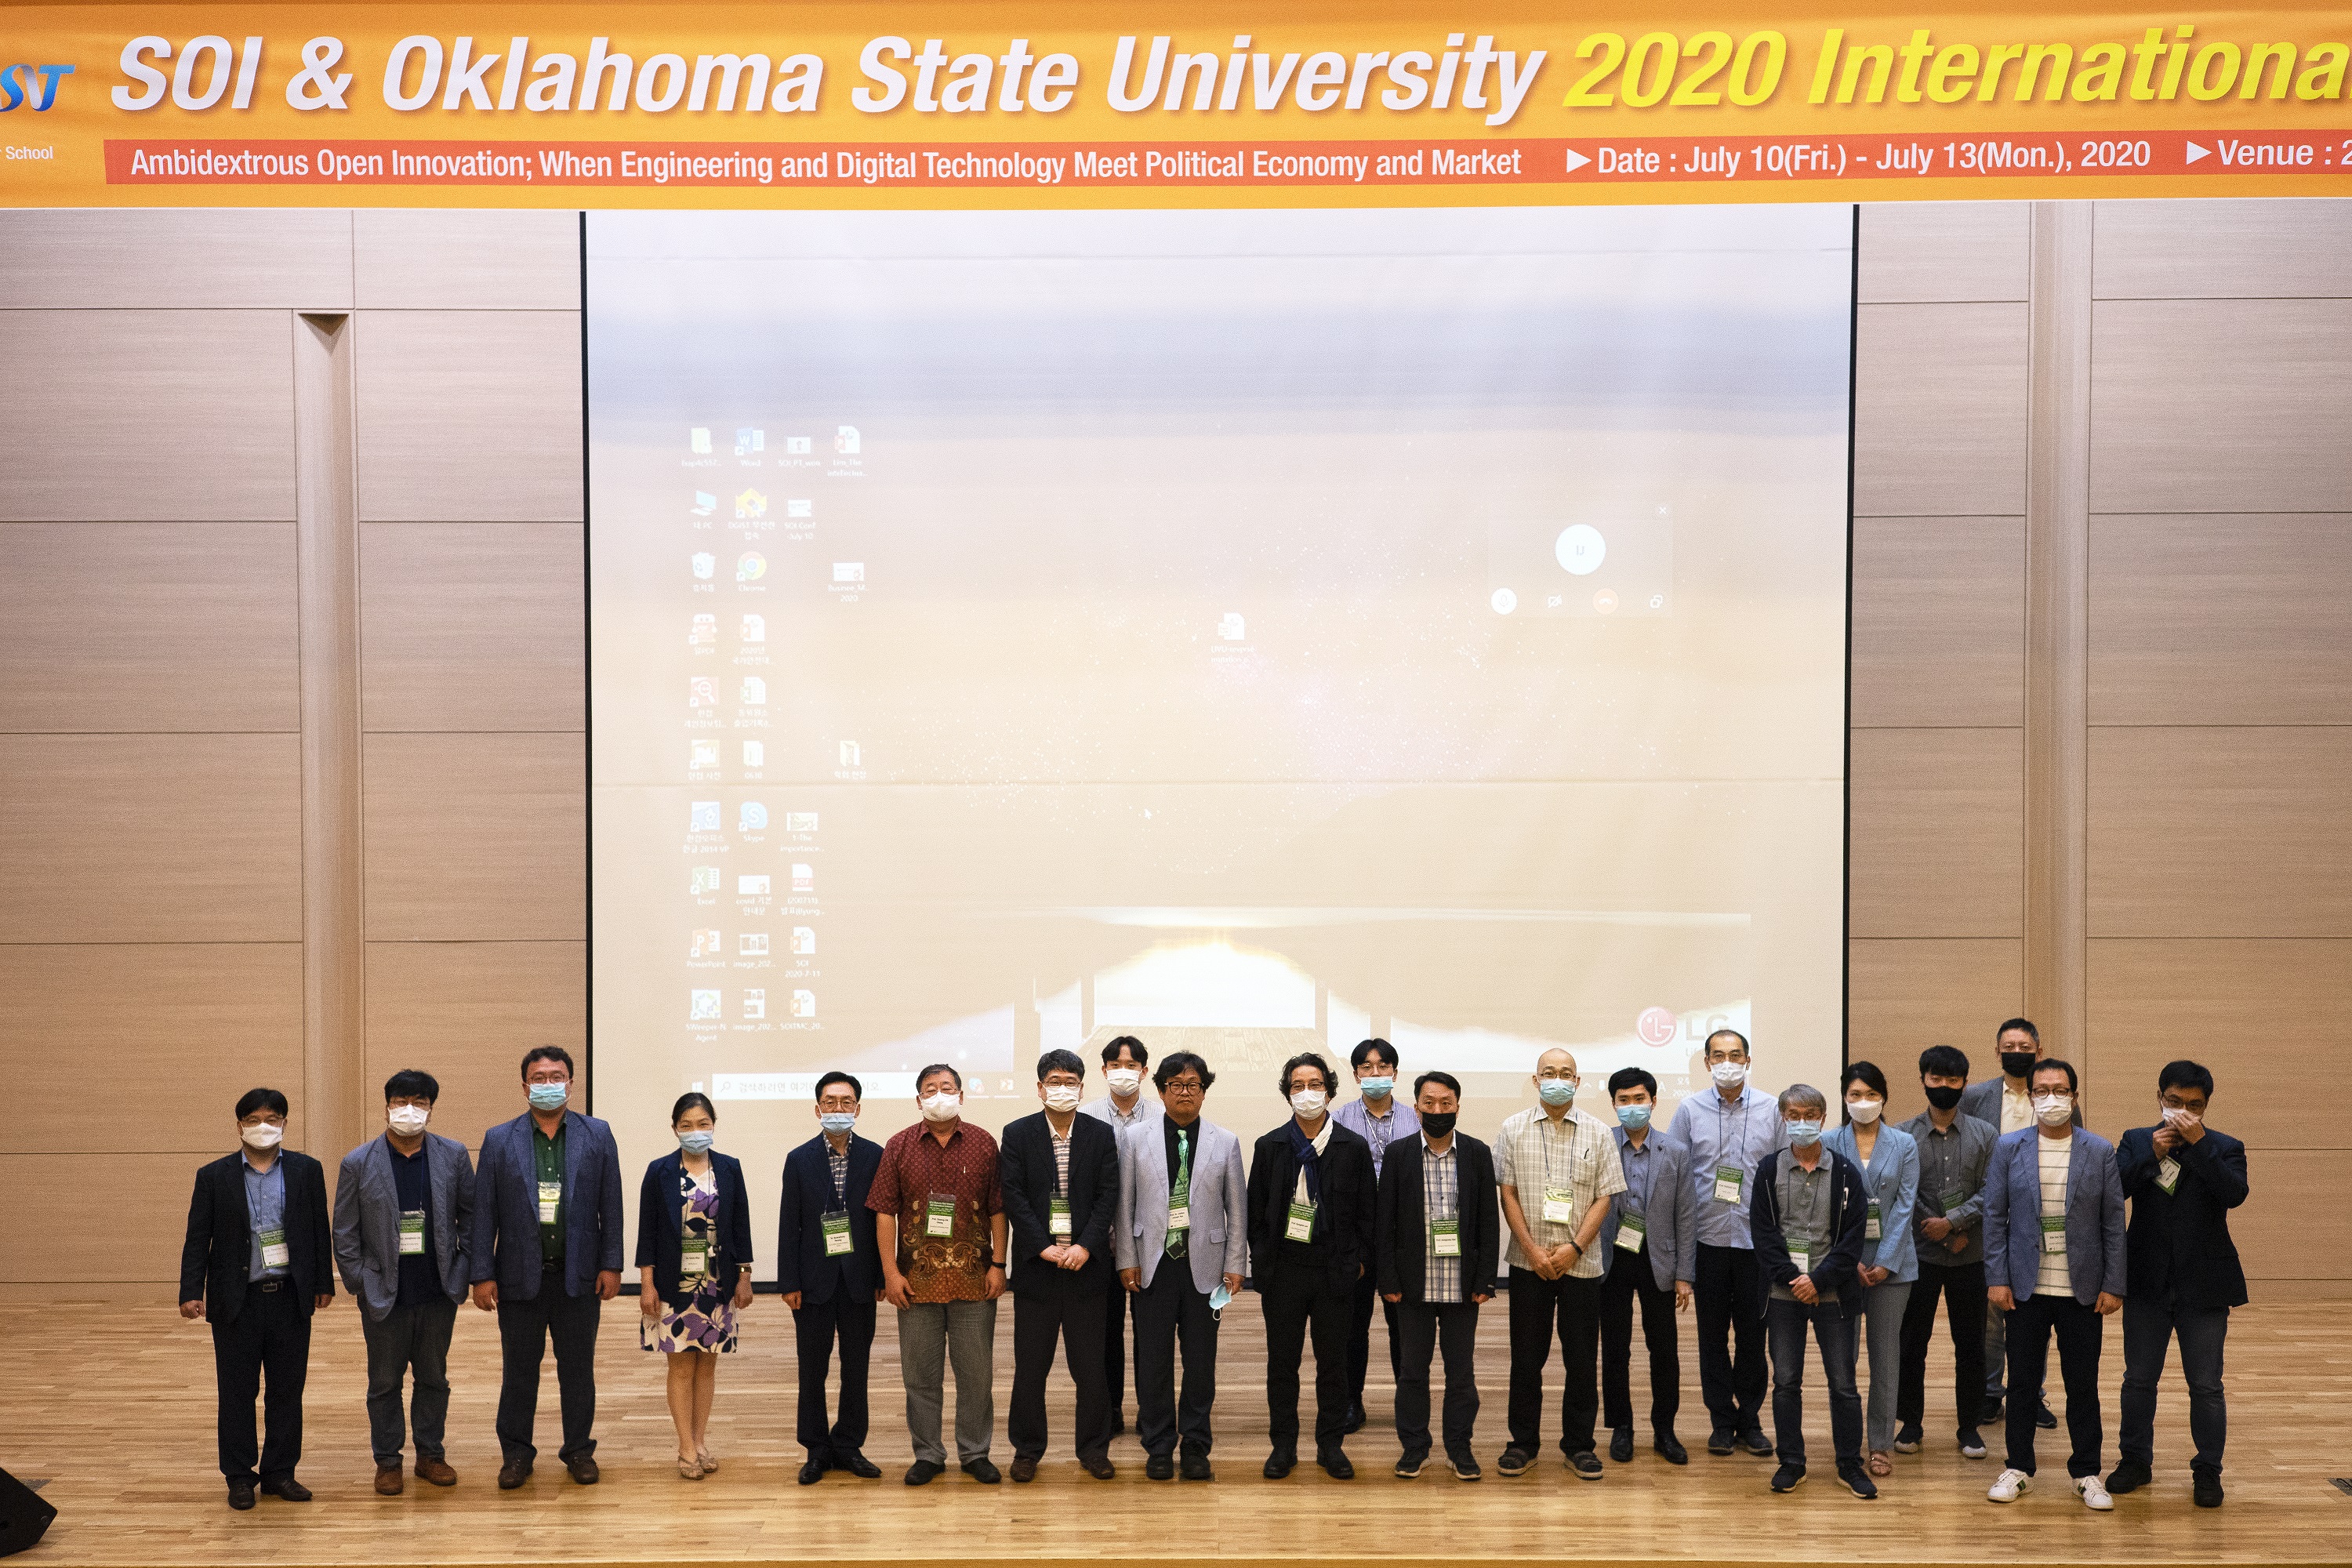 SOI & Oklahoma State Univ. 2020 Conference